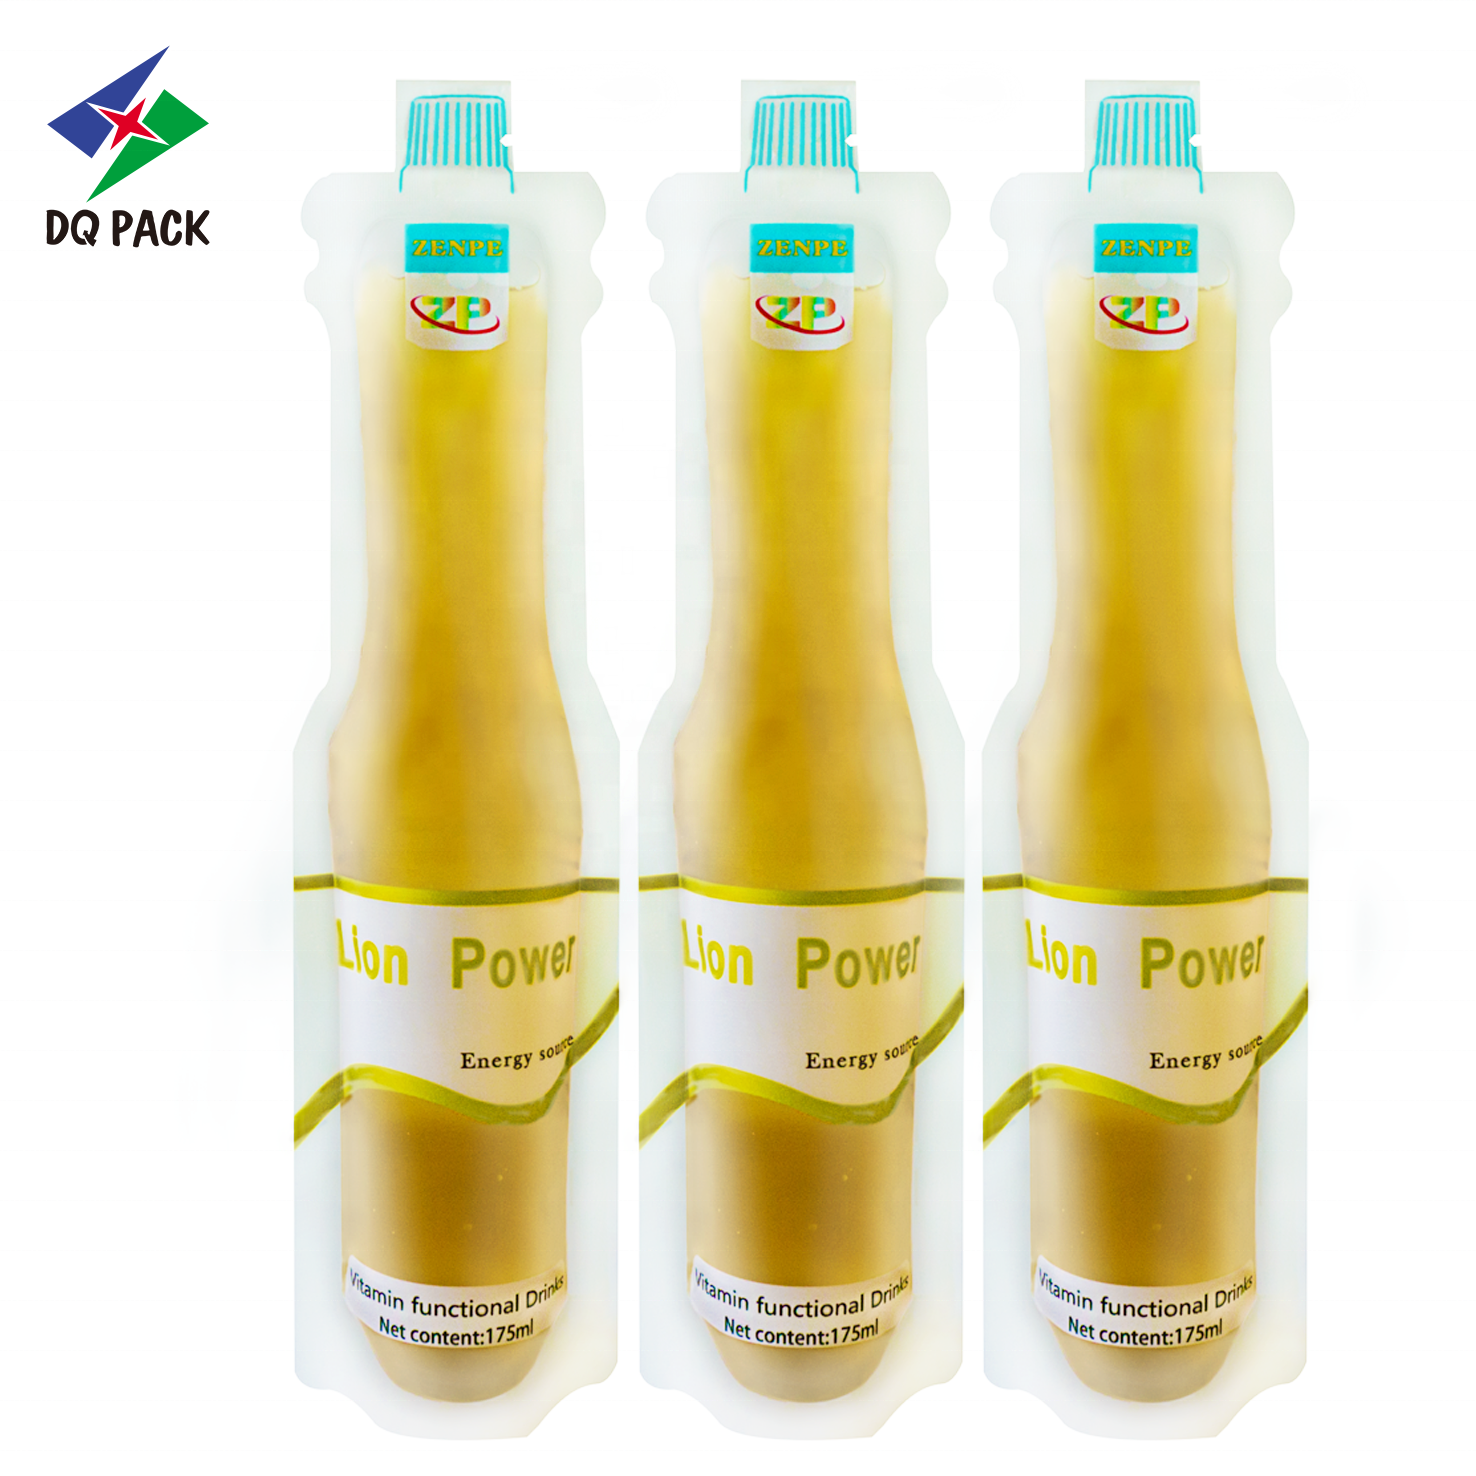 DQ PACK flexible packaging 200ml Bottle Shape Juice Pouch